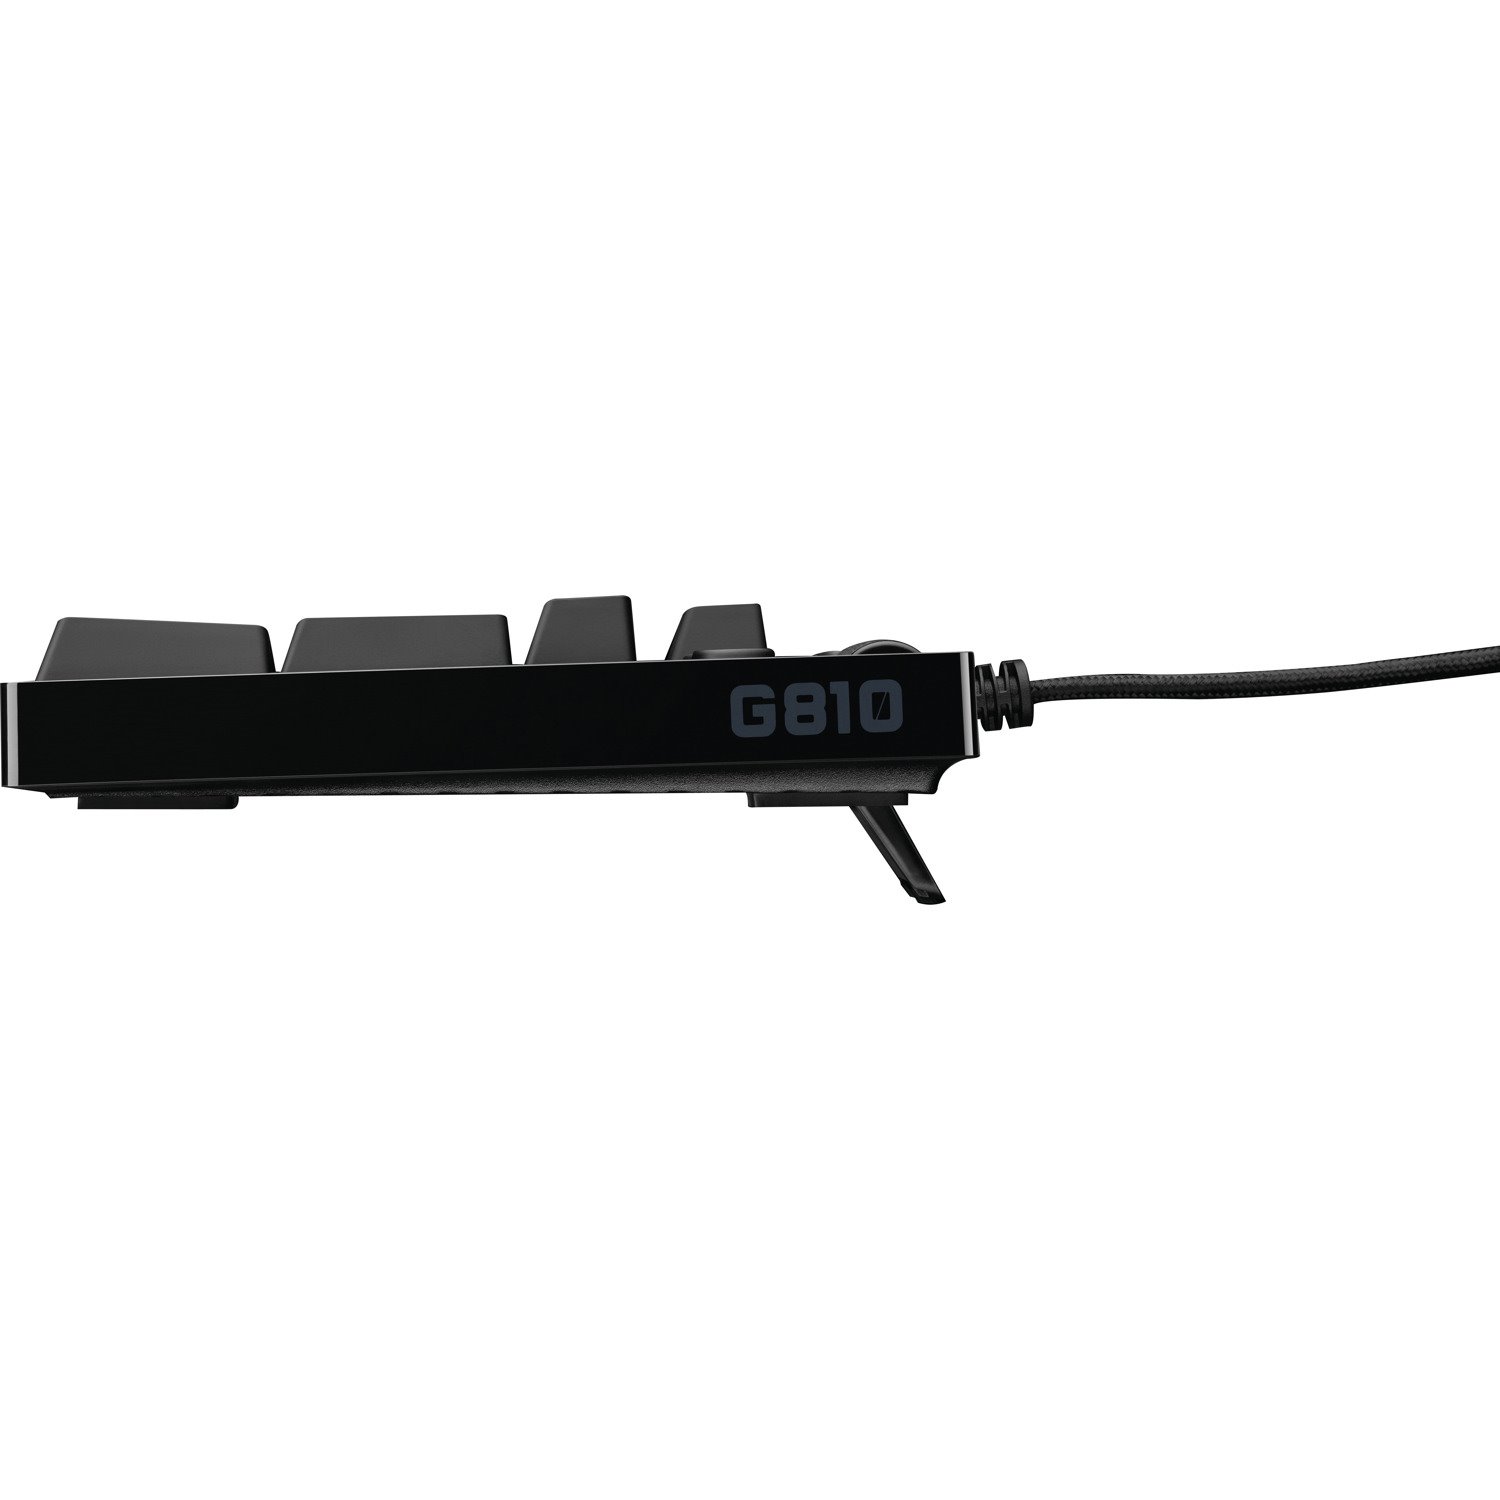 Logitech Orion Spectrum G810 Keyboard - Cable Connectivity - USB 2.0 Interface - English (UK) - Black